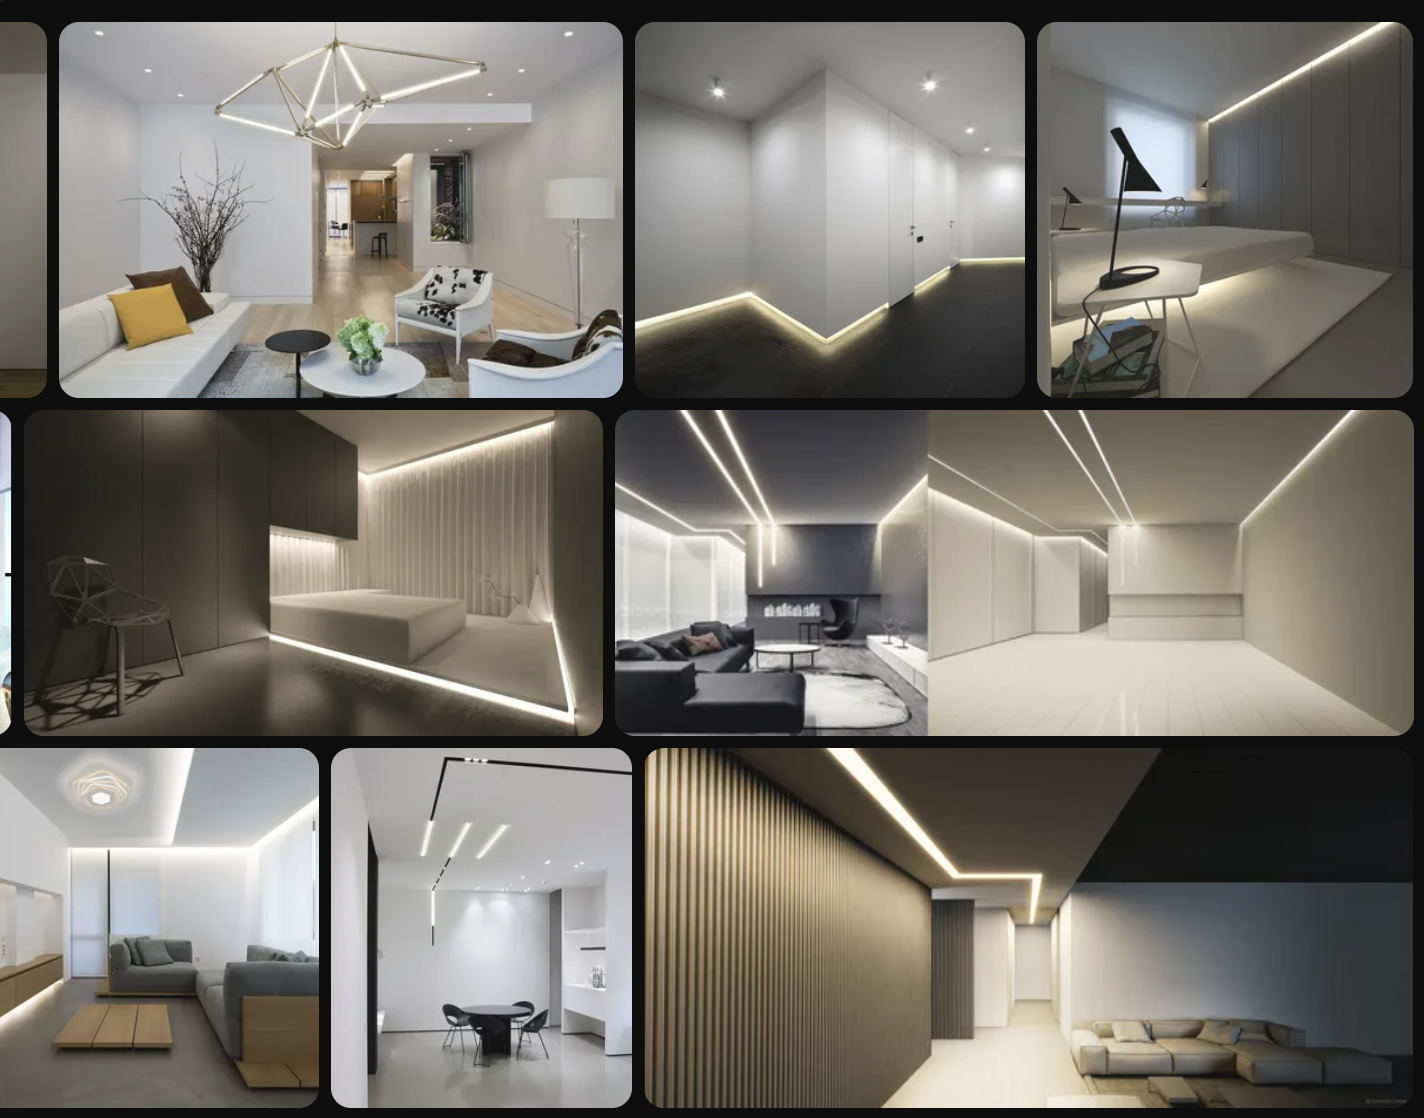 Когда понадобится дизайн проект квартиры | Форум internat-mednogorsk.ru